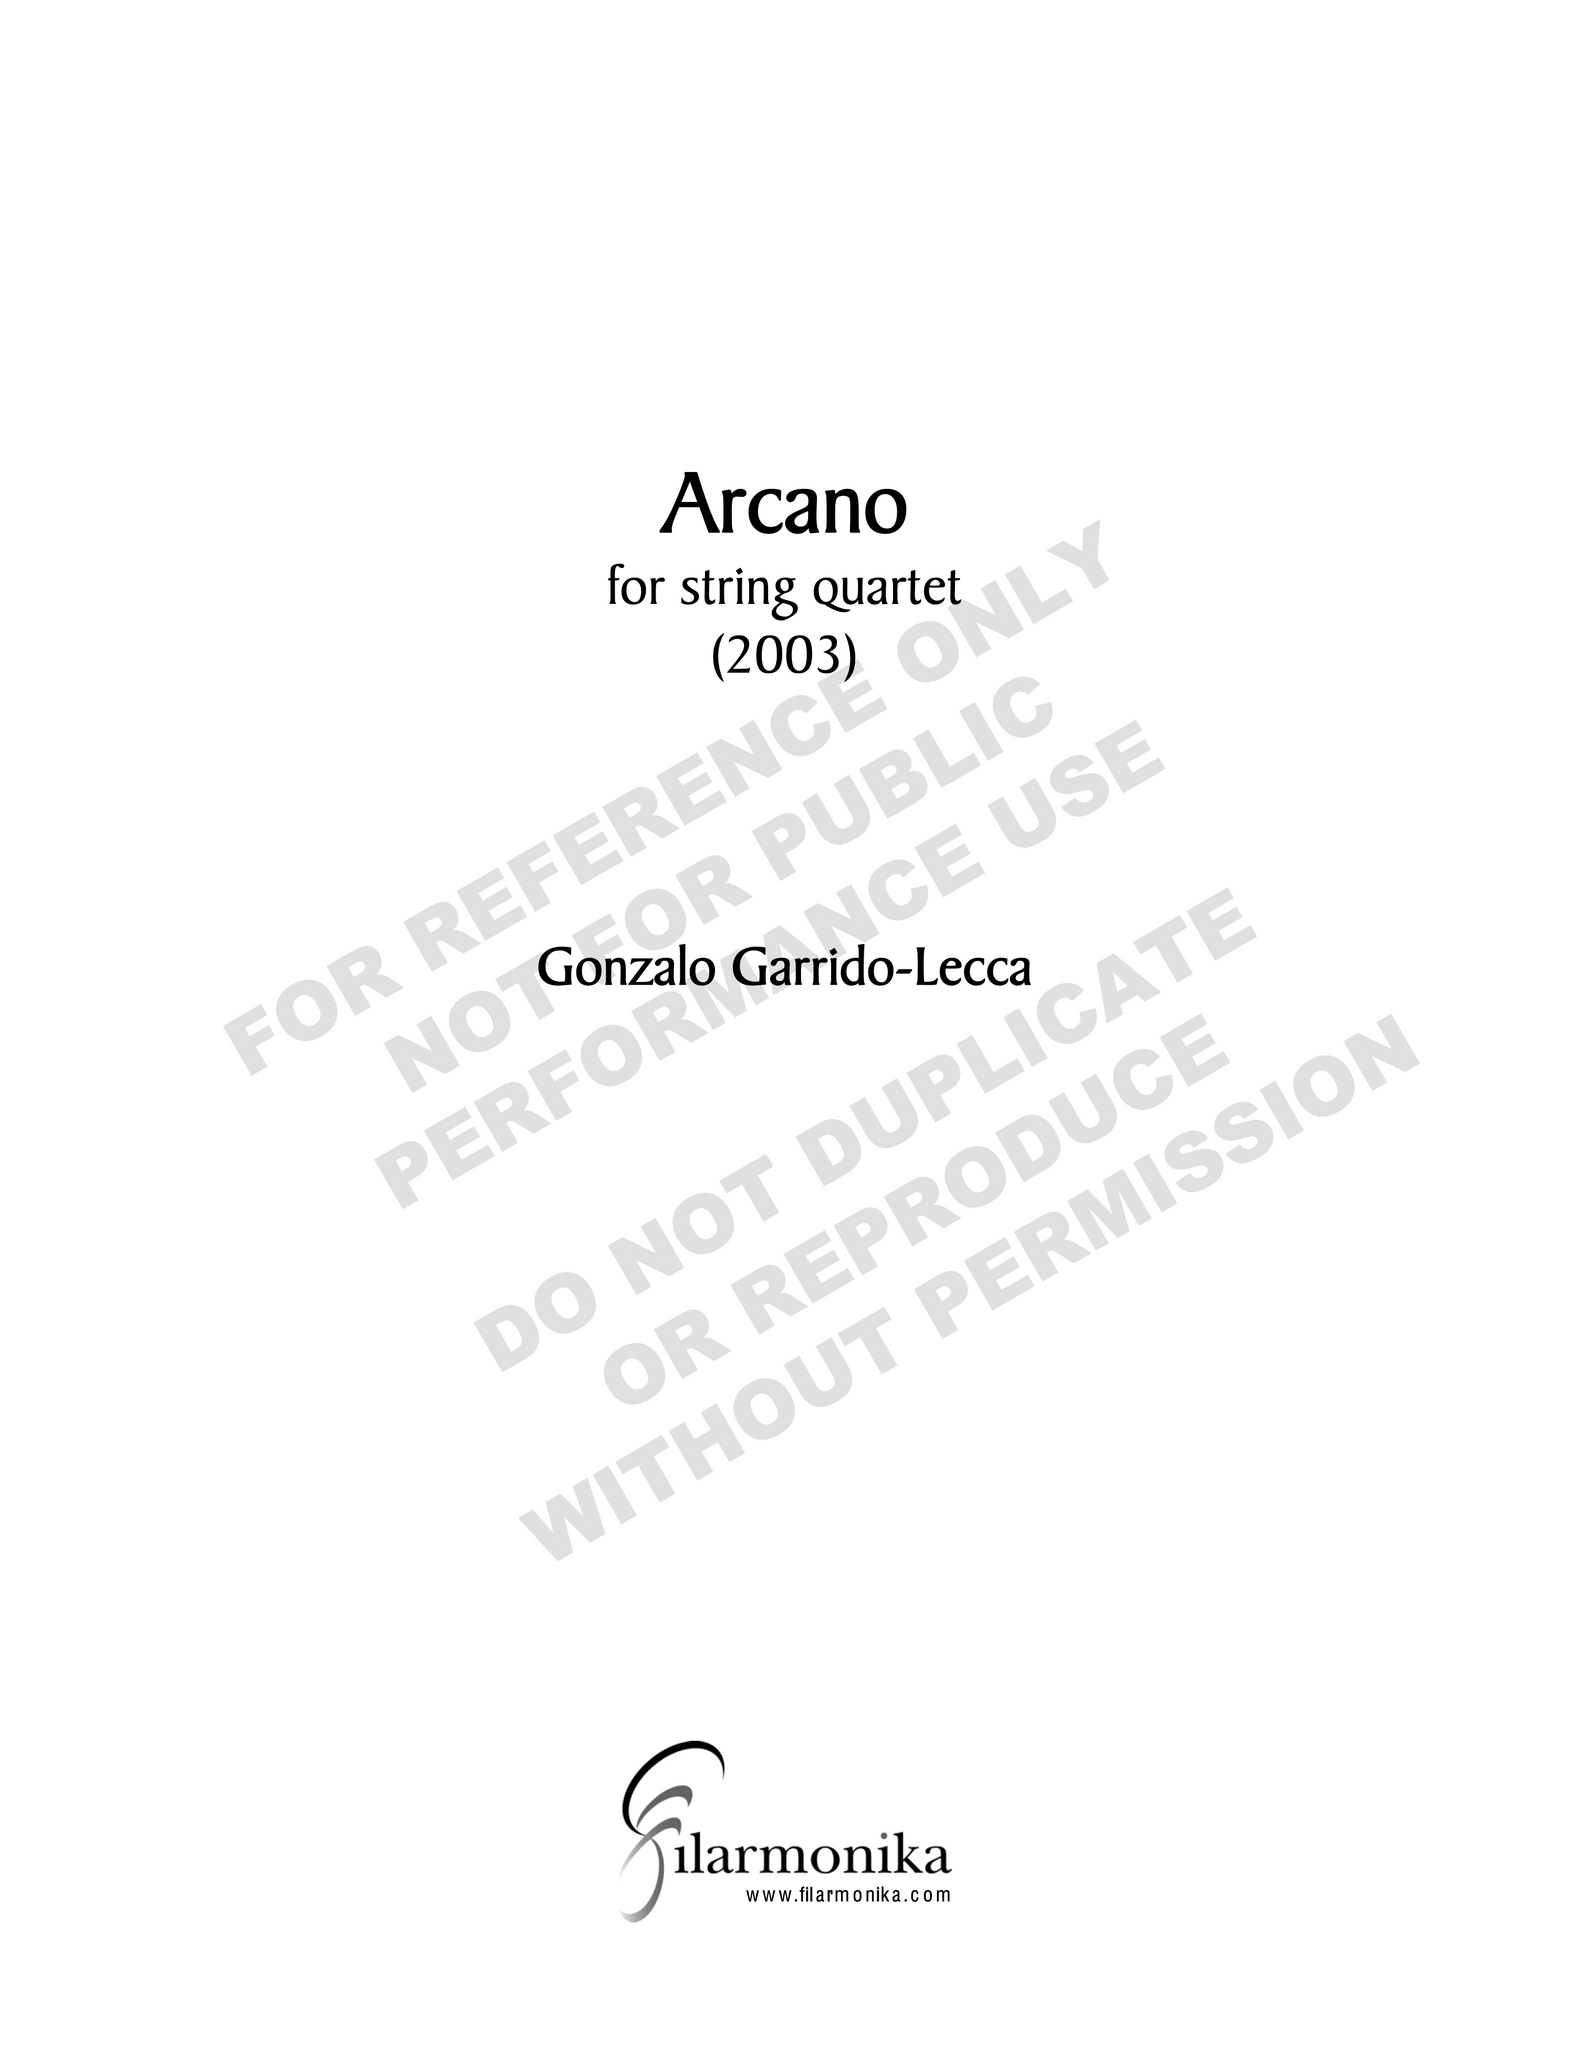 Arcano, for string quartet